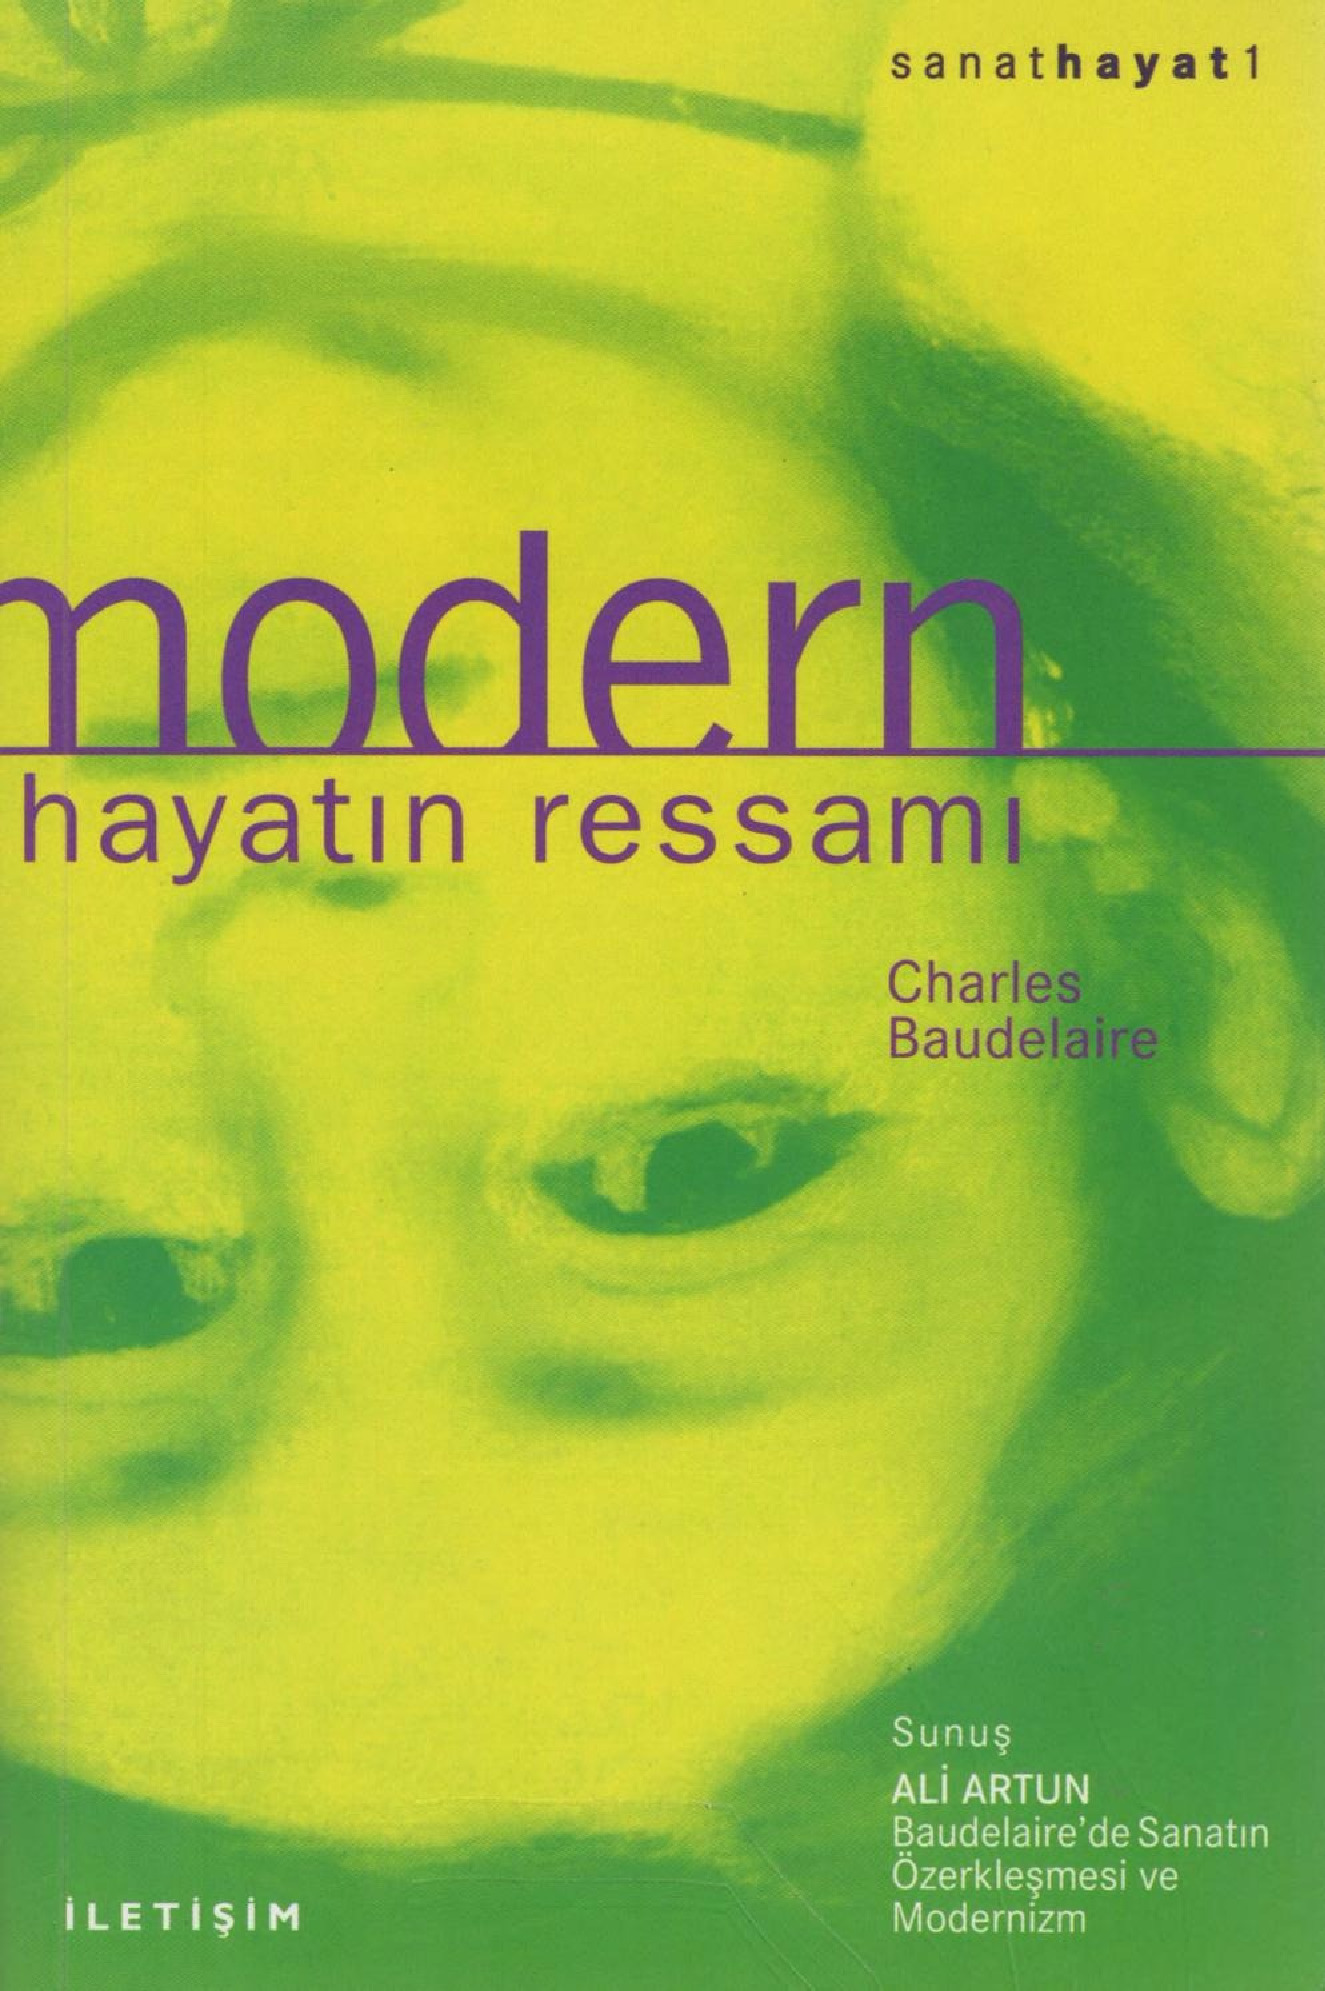 Modern Hayatın Ressami-Charles Baudelaire-Ali Berktay-2003-260s